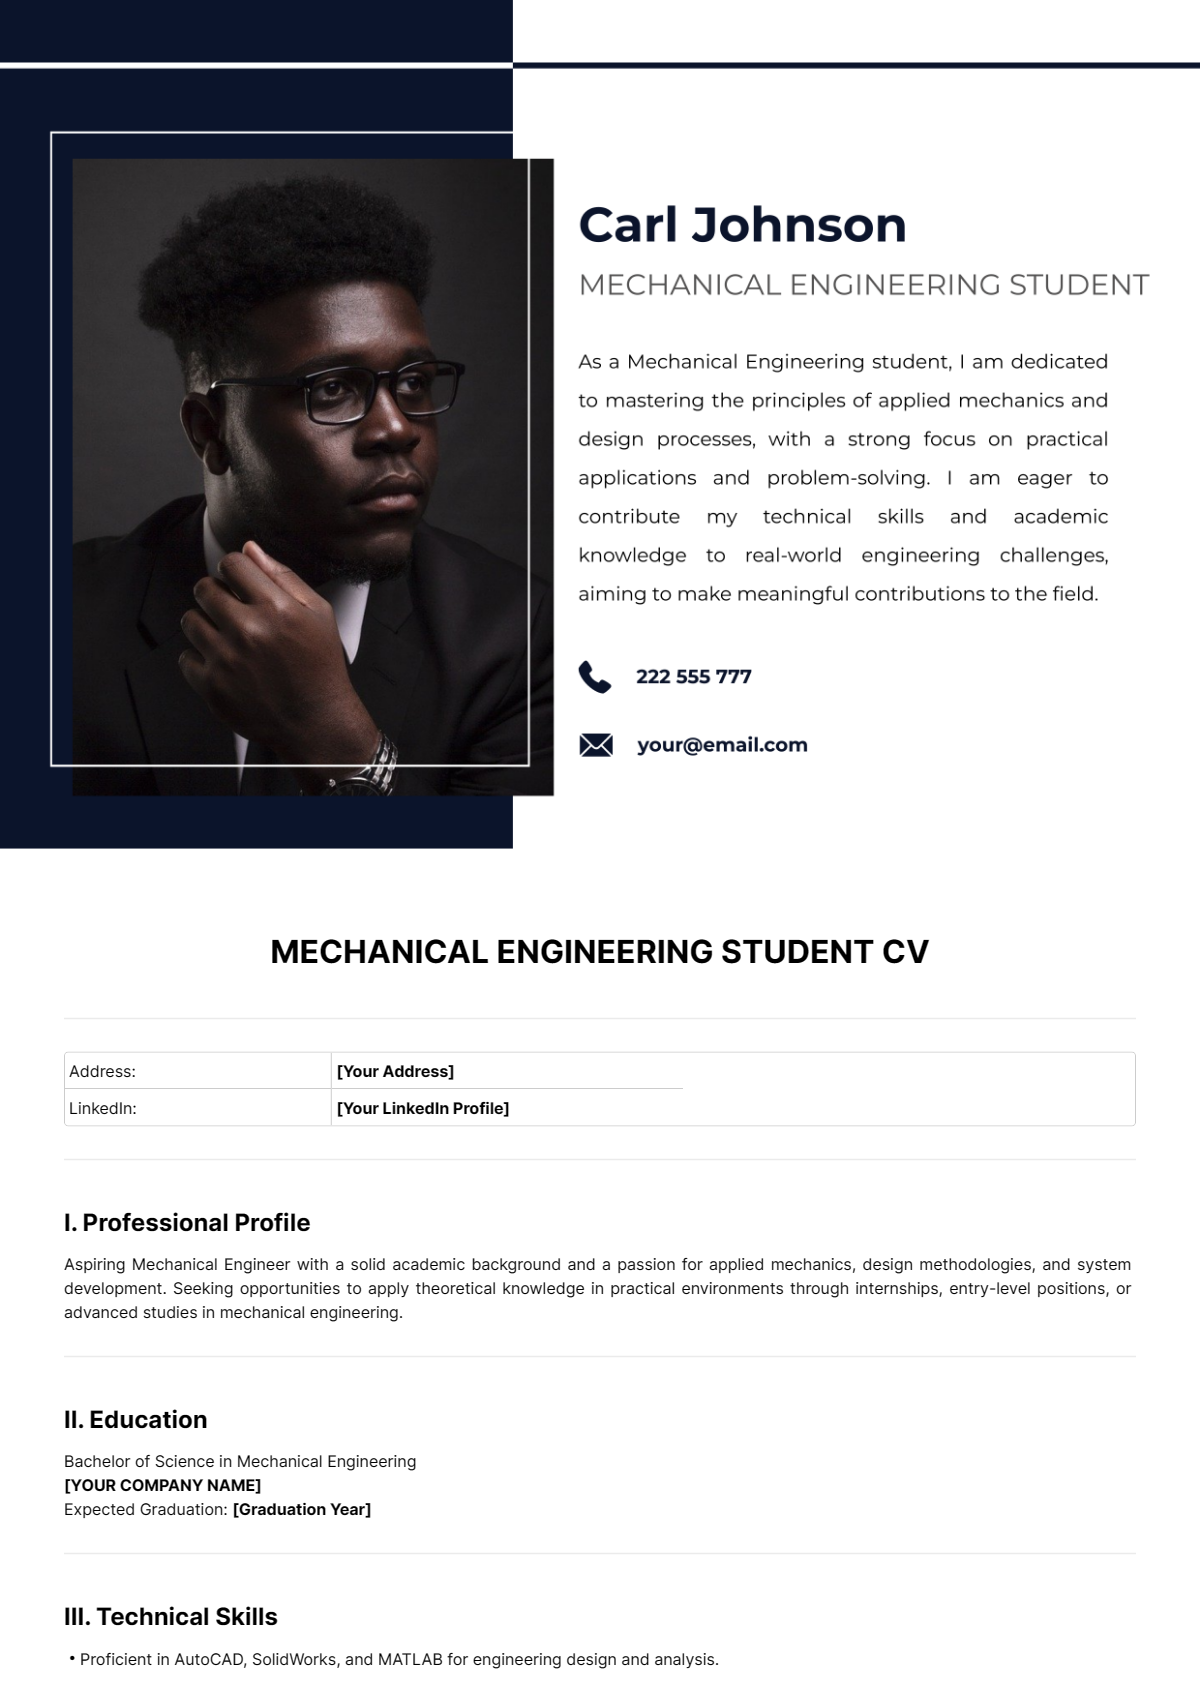 Free Mechanical Engineering Student CV Template